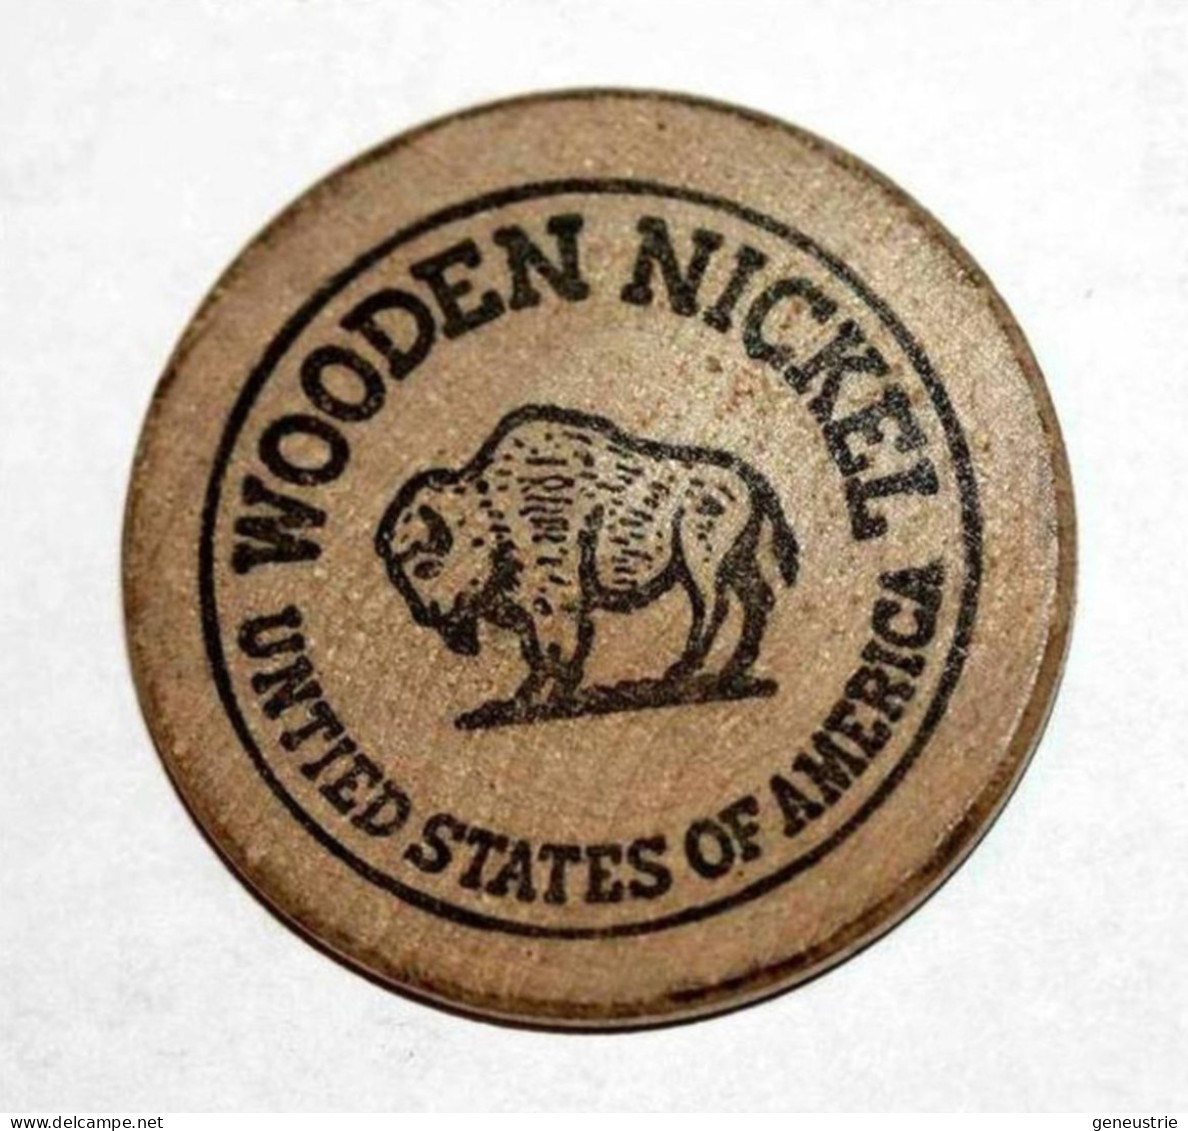 Wooden Token - Wooden Nickel - Jeton Bois Bison Monnaie Nécessité - Appreciation Dinner 1969 - Etats-Unis - Noodgeld